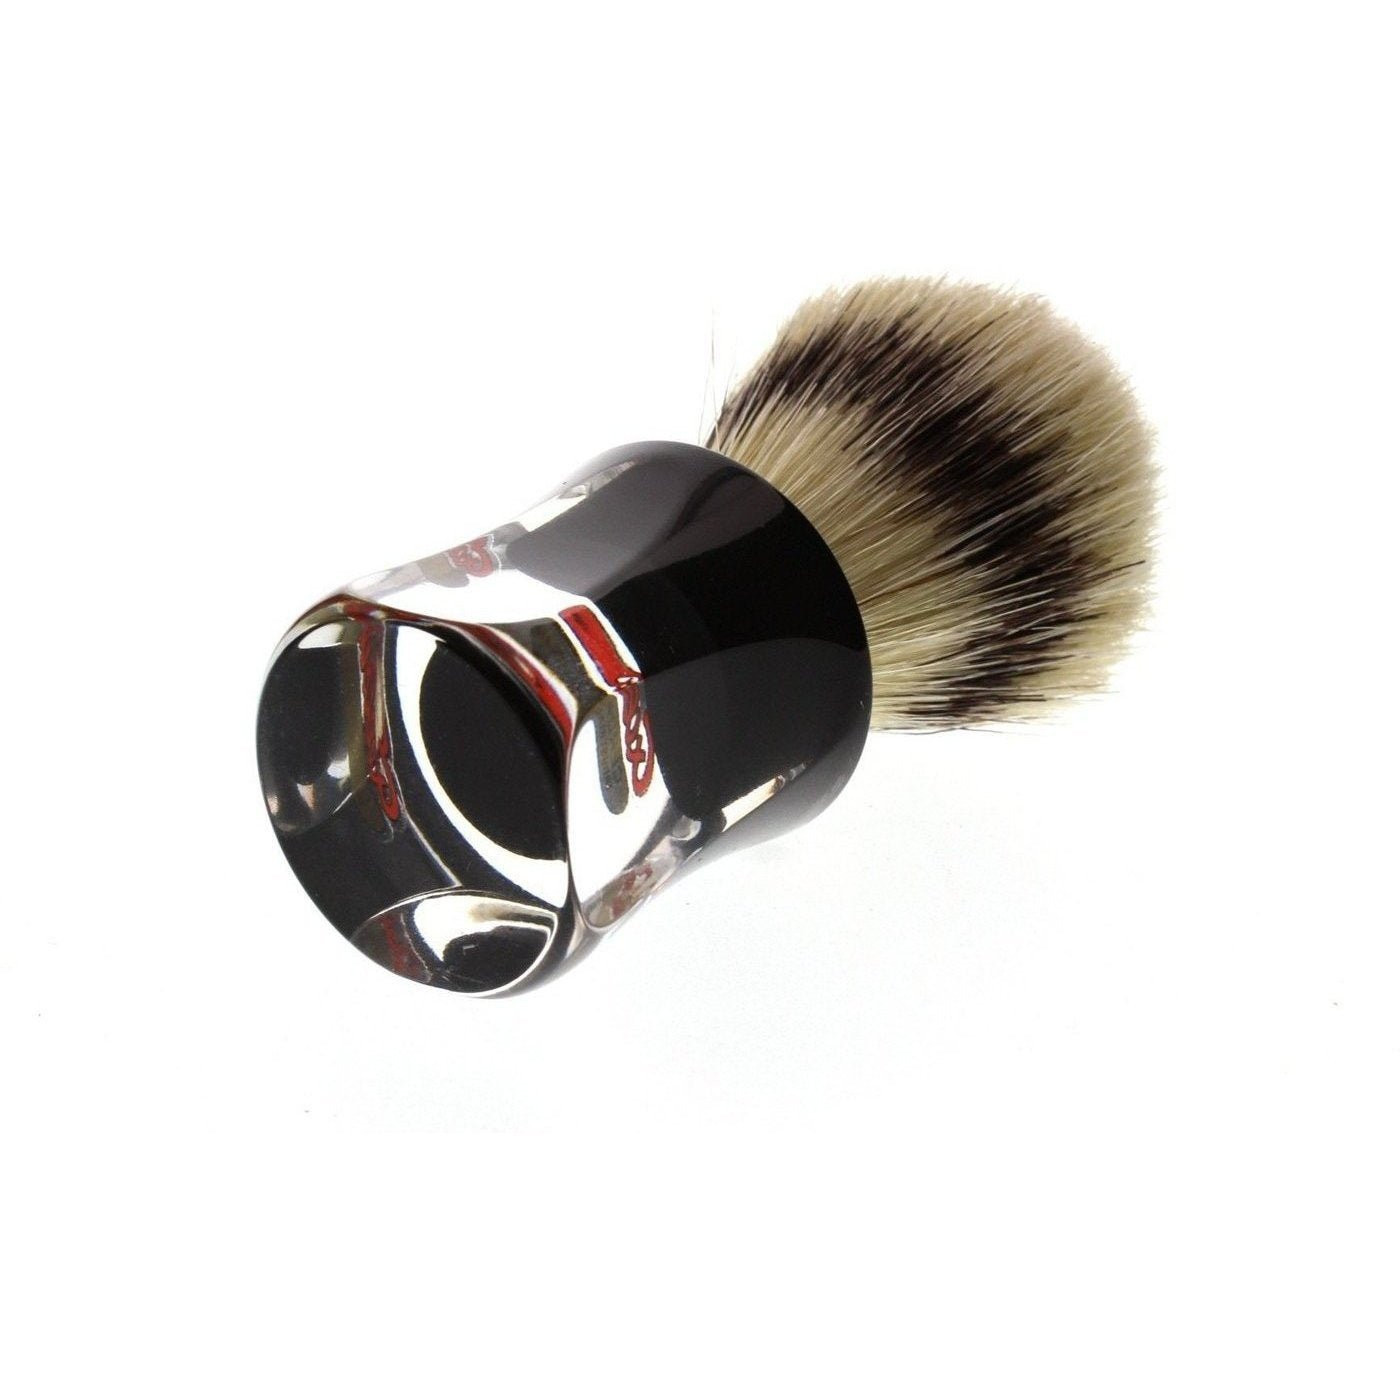 Product image 4 for Semogue 620 Pure Bristle Shaving Brush